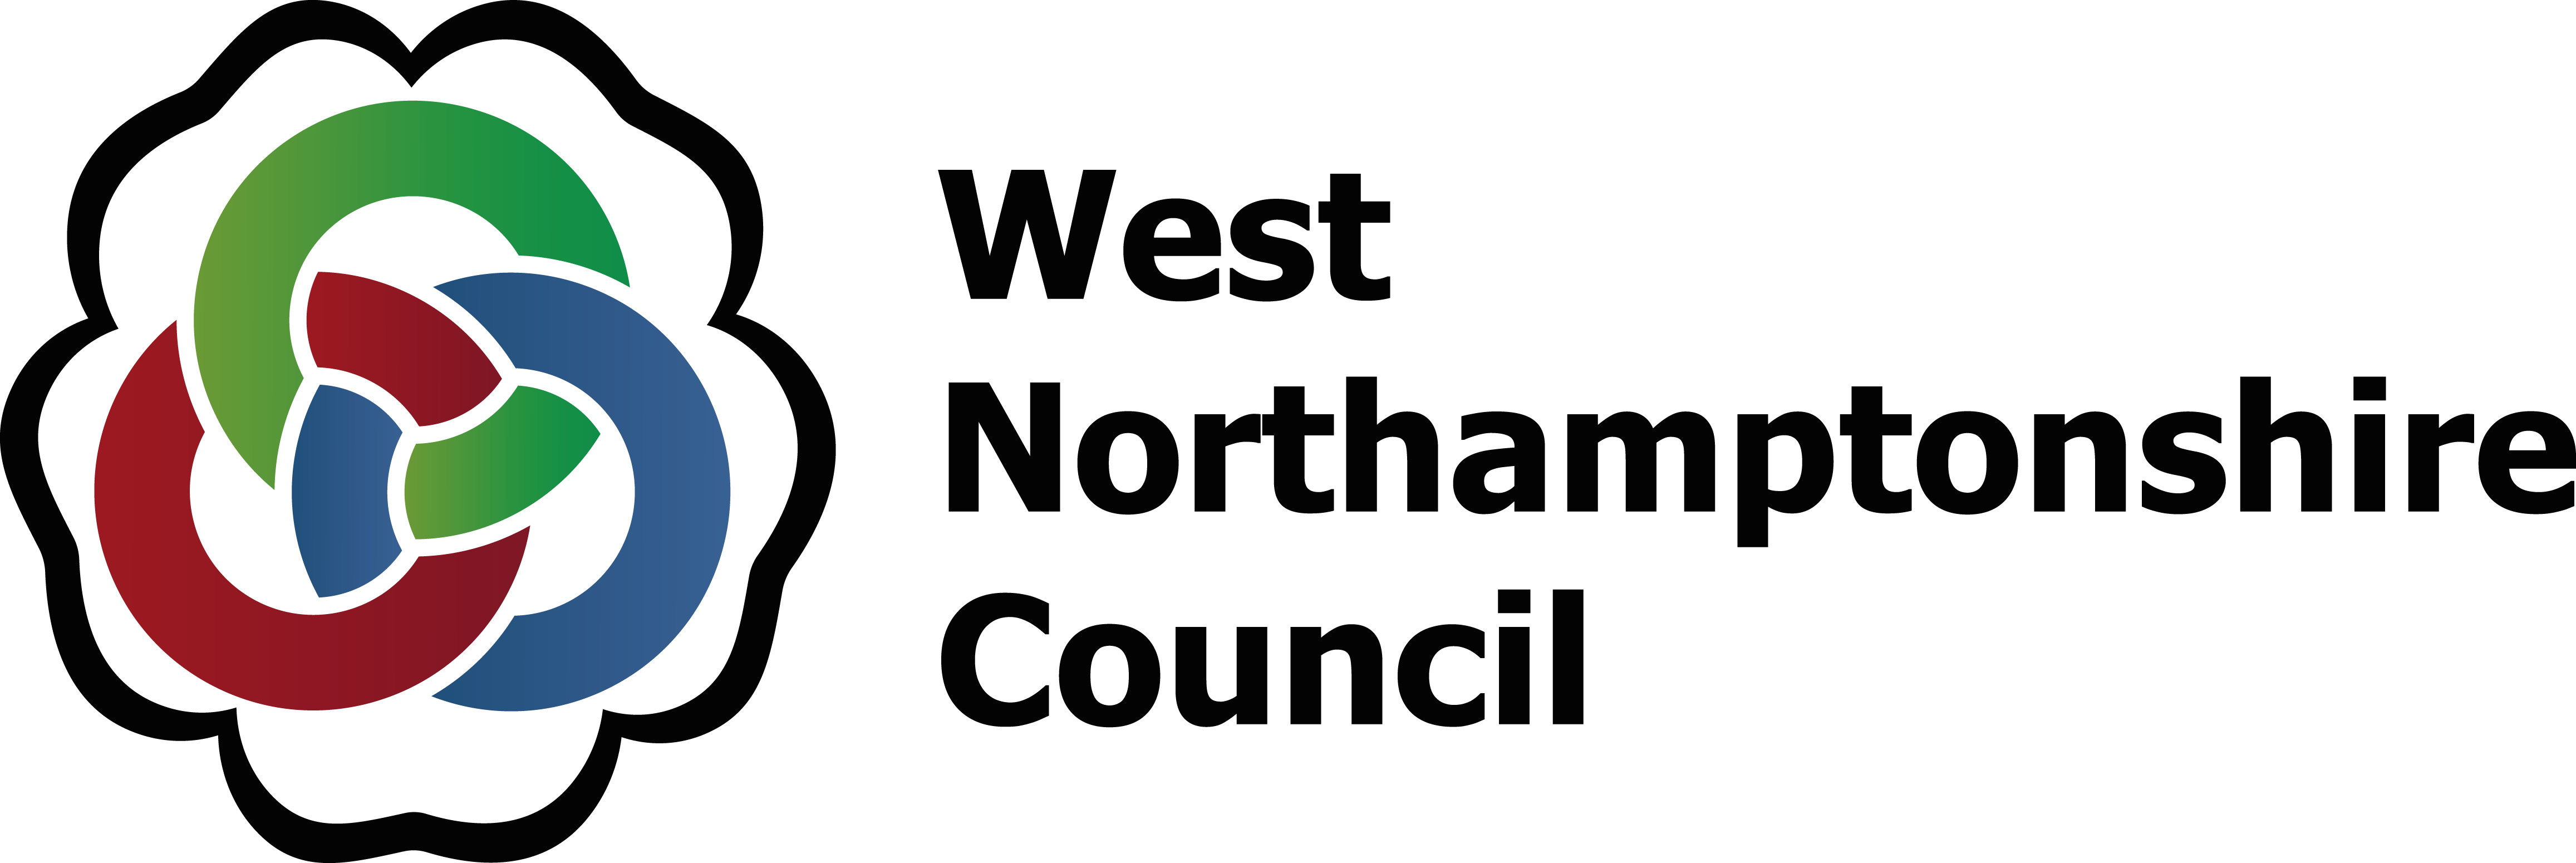 West Northamptonshire Transparent Colourful logo